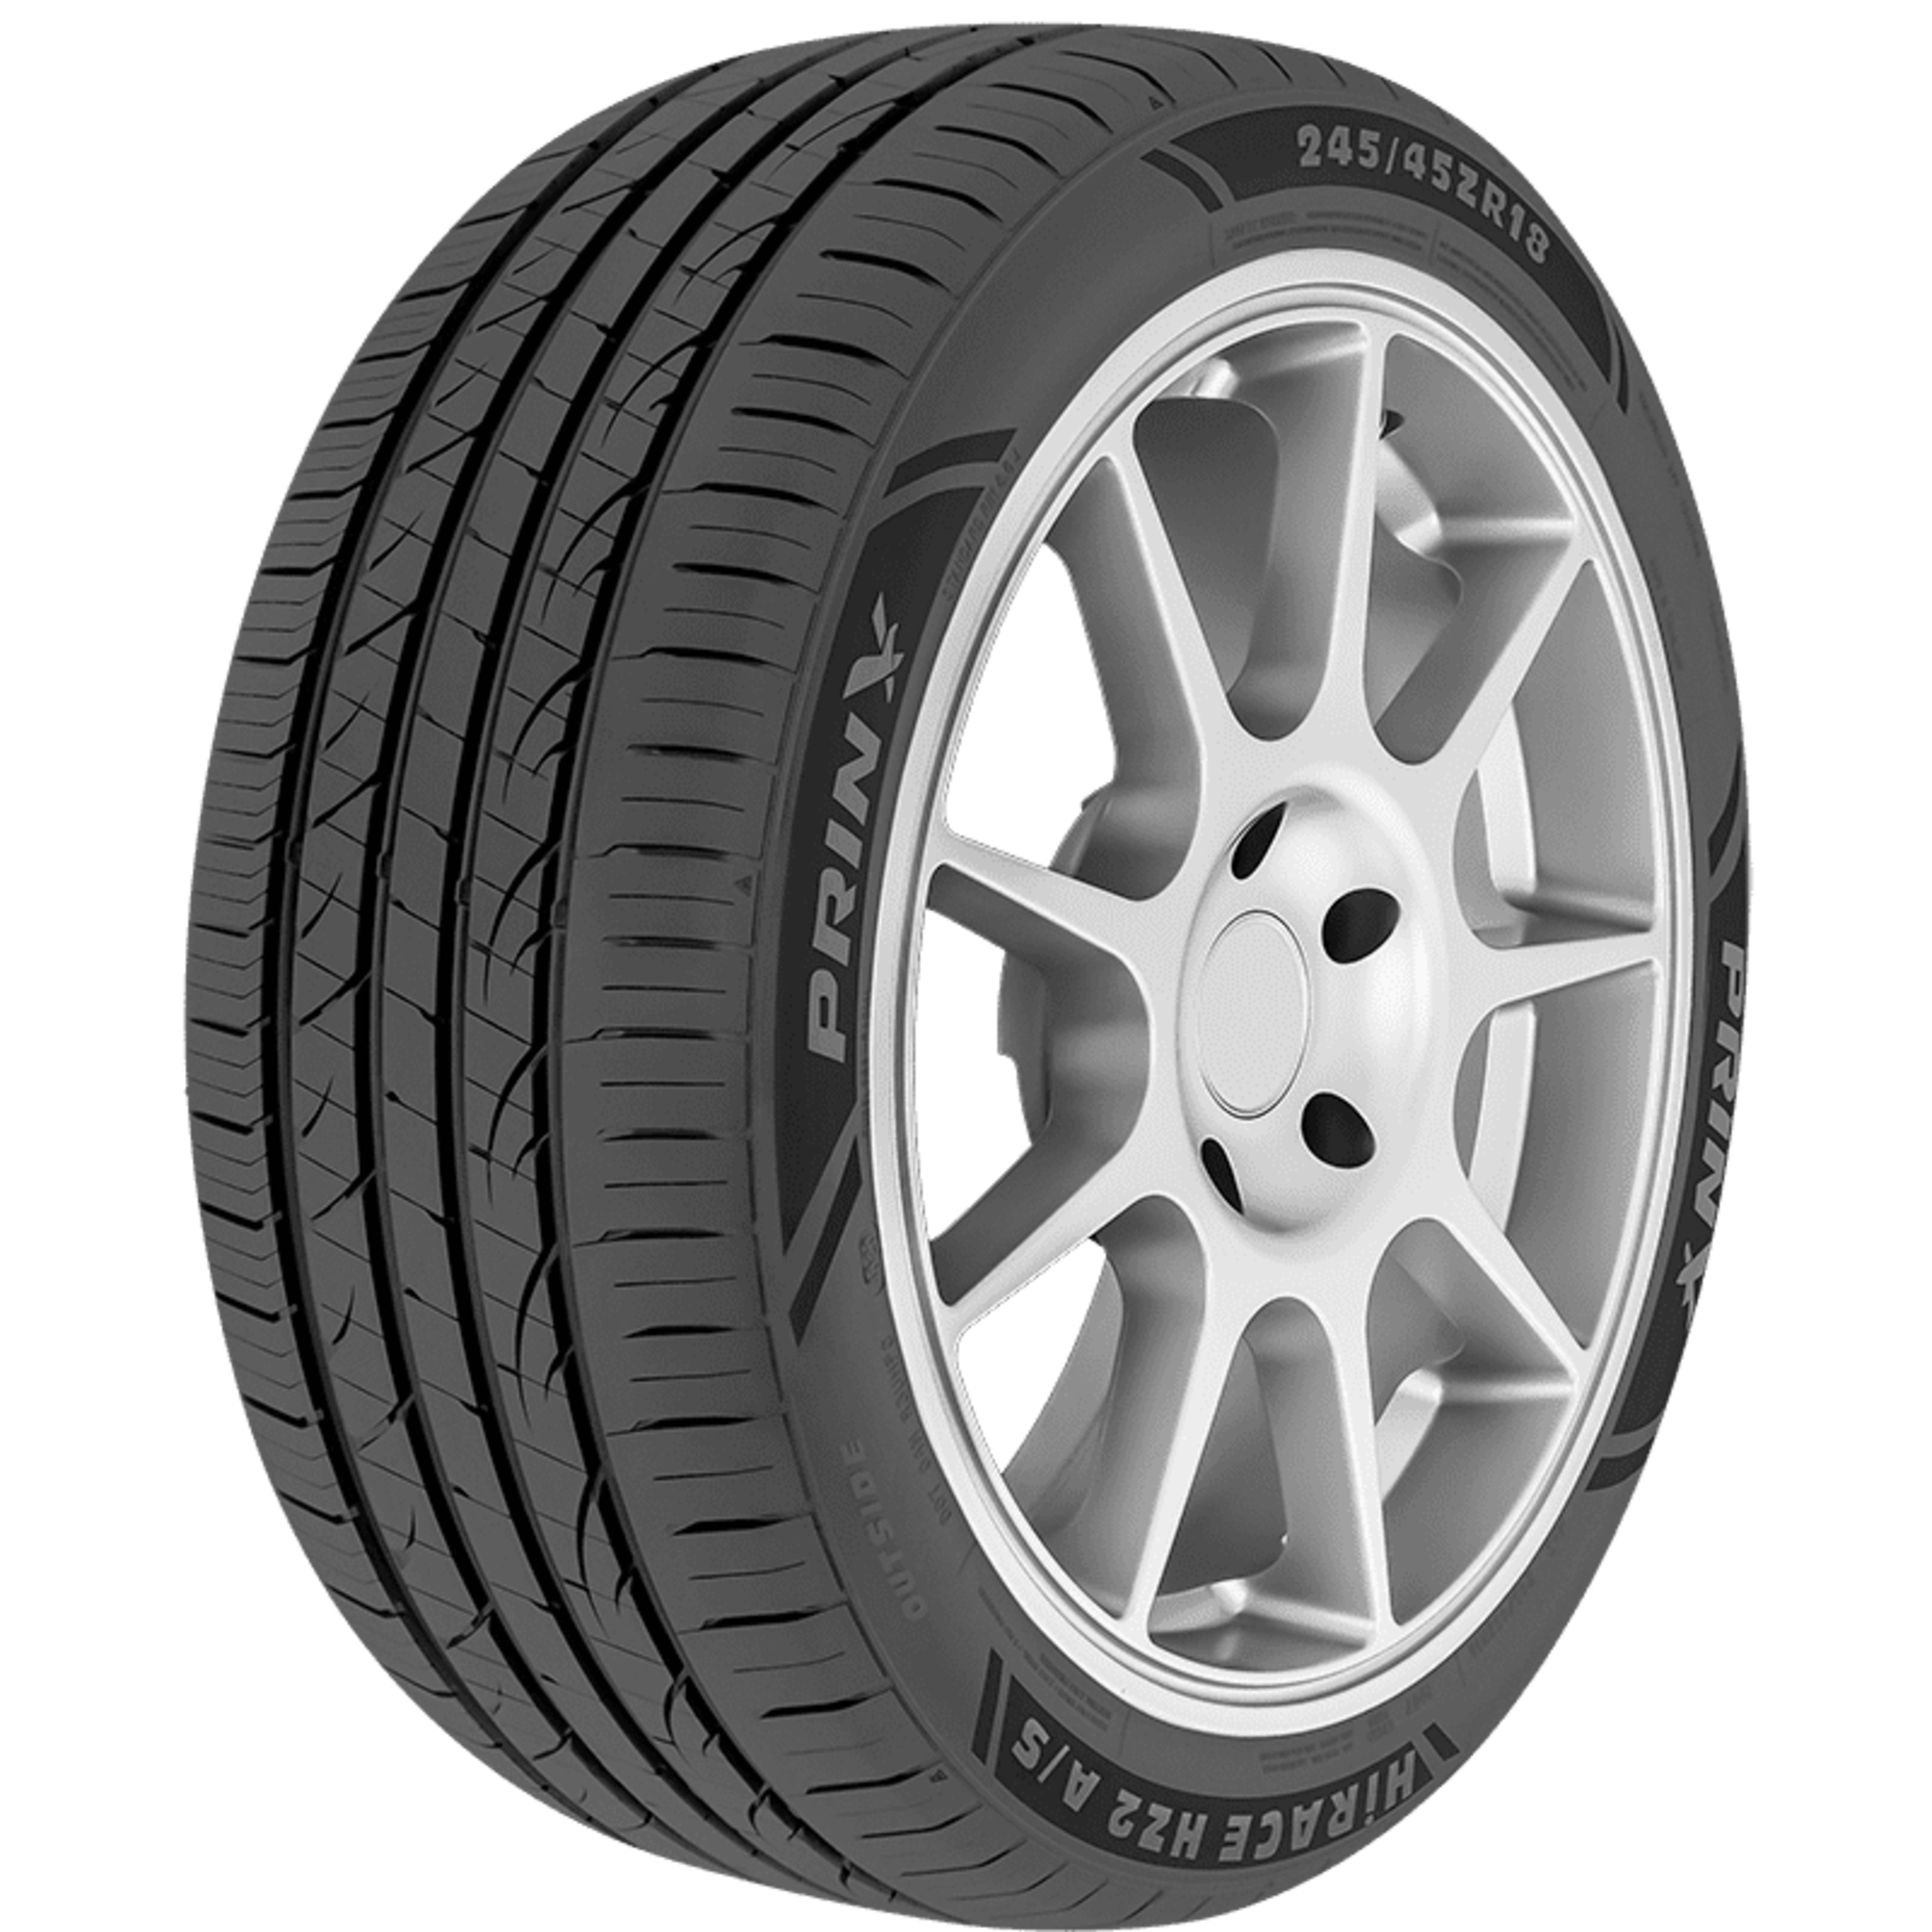 Buy Prinx HiRACE HZ2 A/S P255/45Rr18 Tires SimpleTire